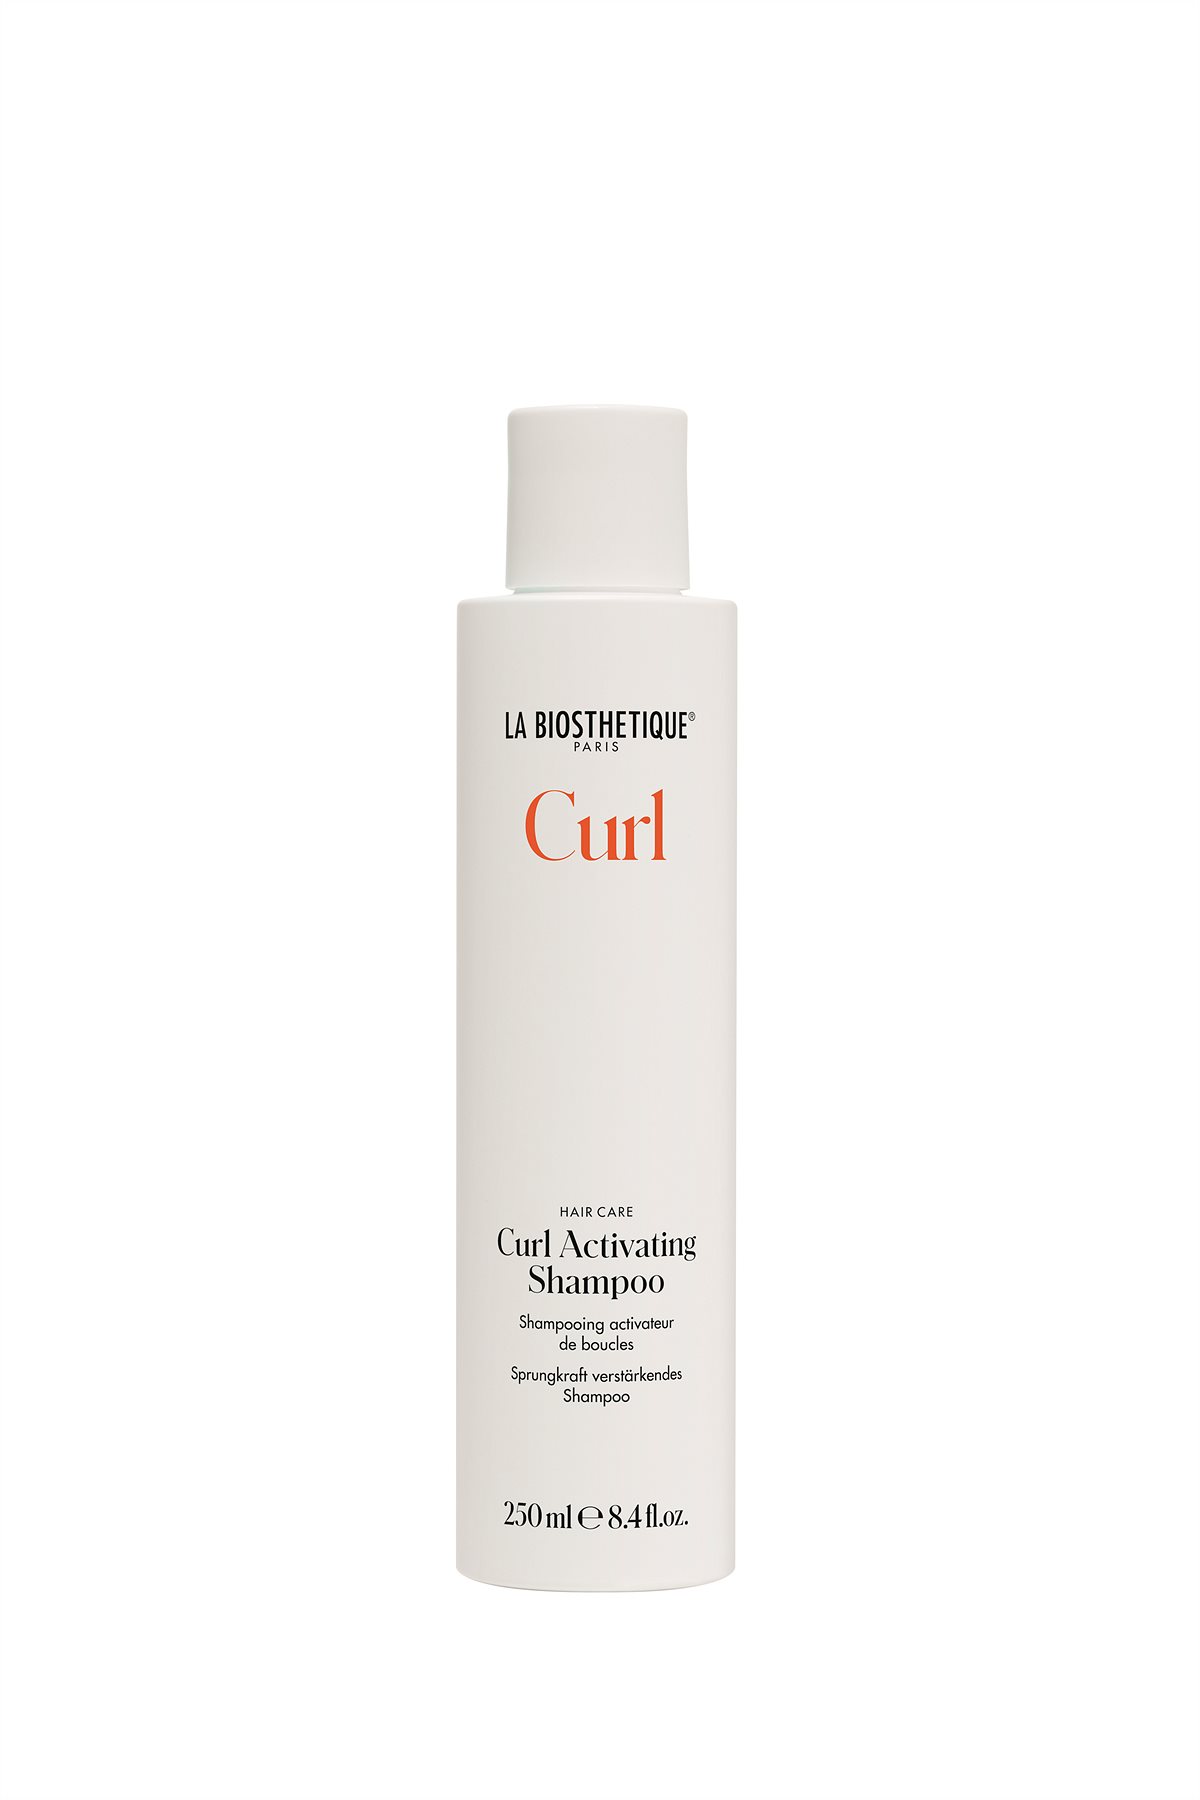 la-biosthetique_curl-activating-shampoo_250ml_EUR 22,00 (UVP)